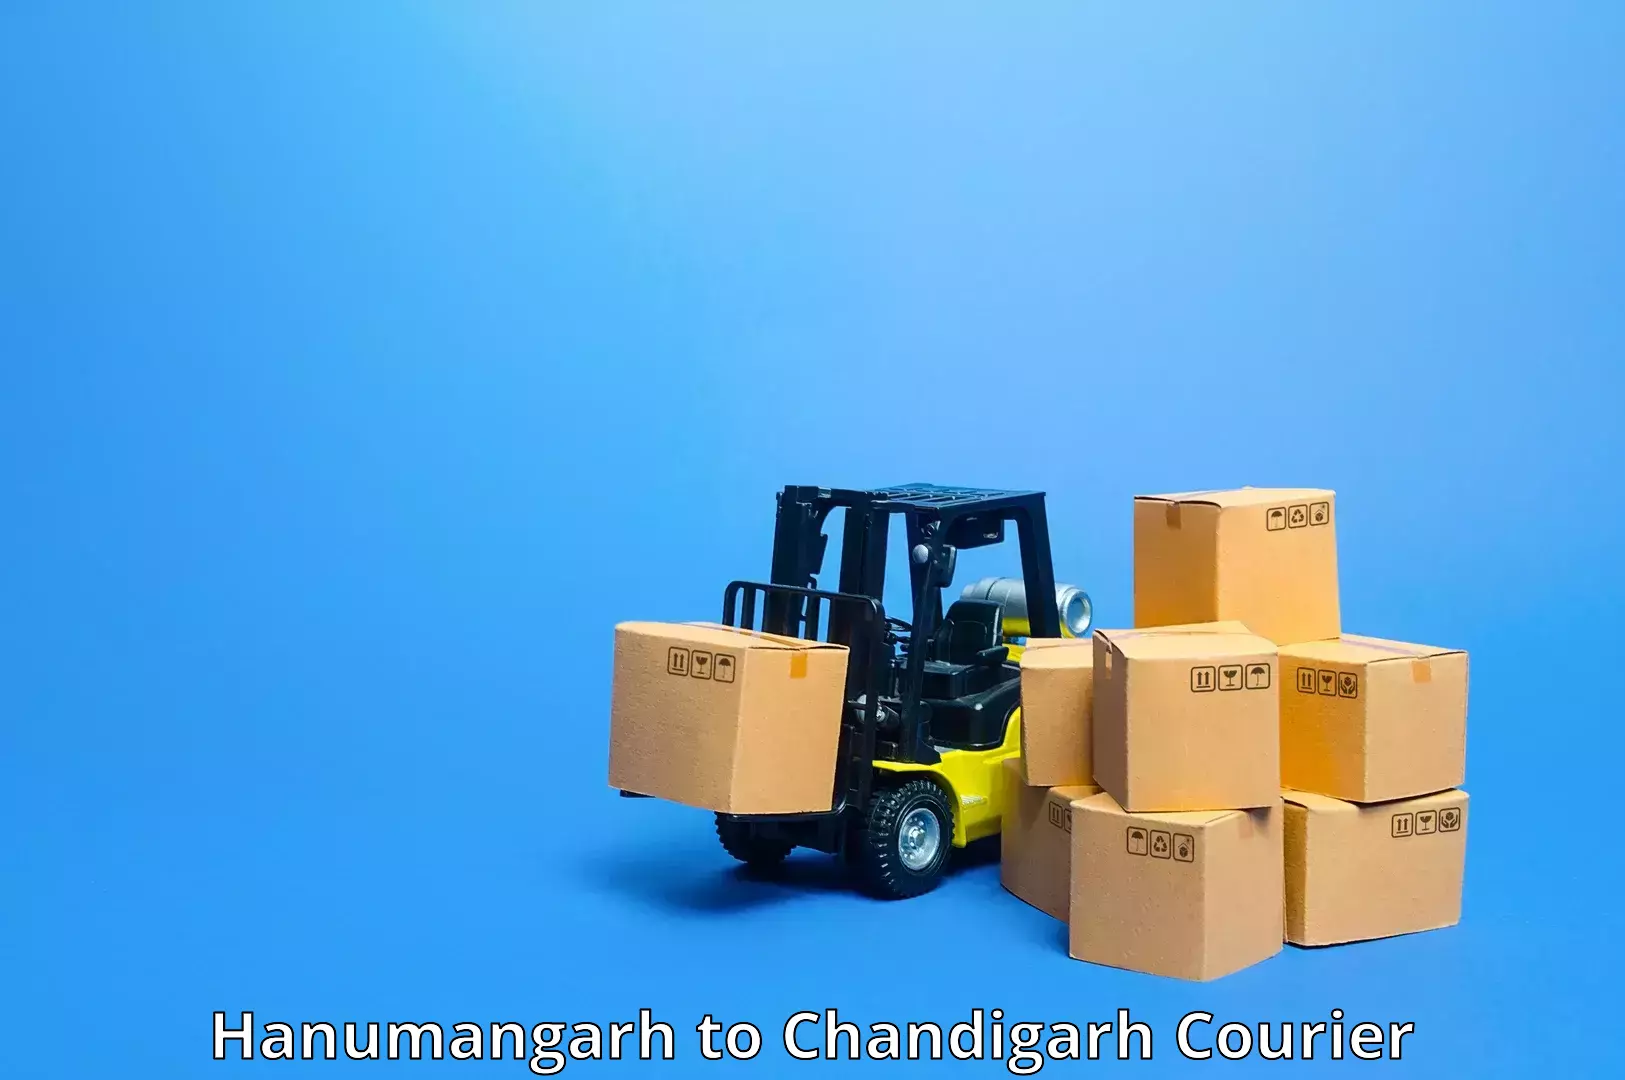 Cash on delivery service Hanumangarh to Chandigarh